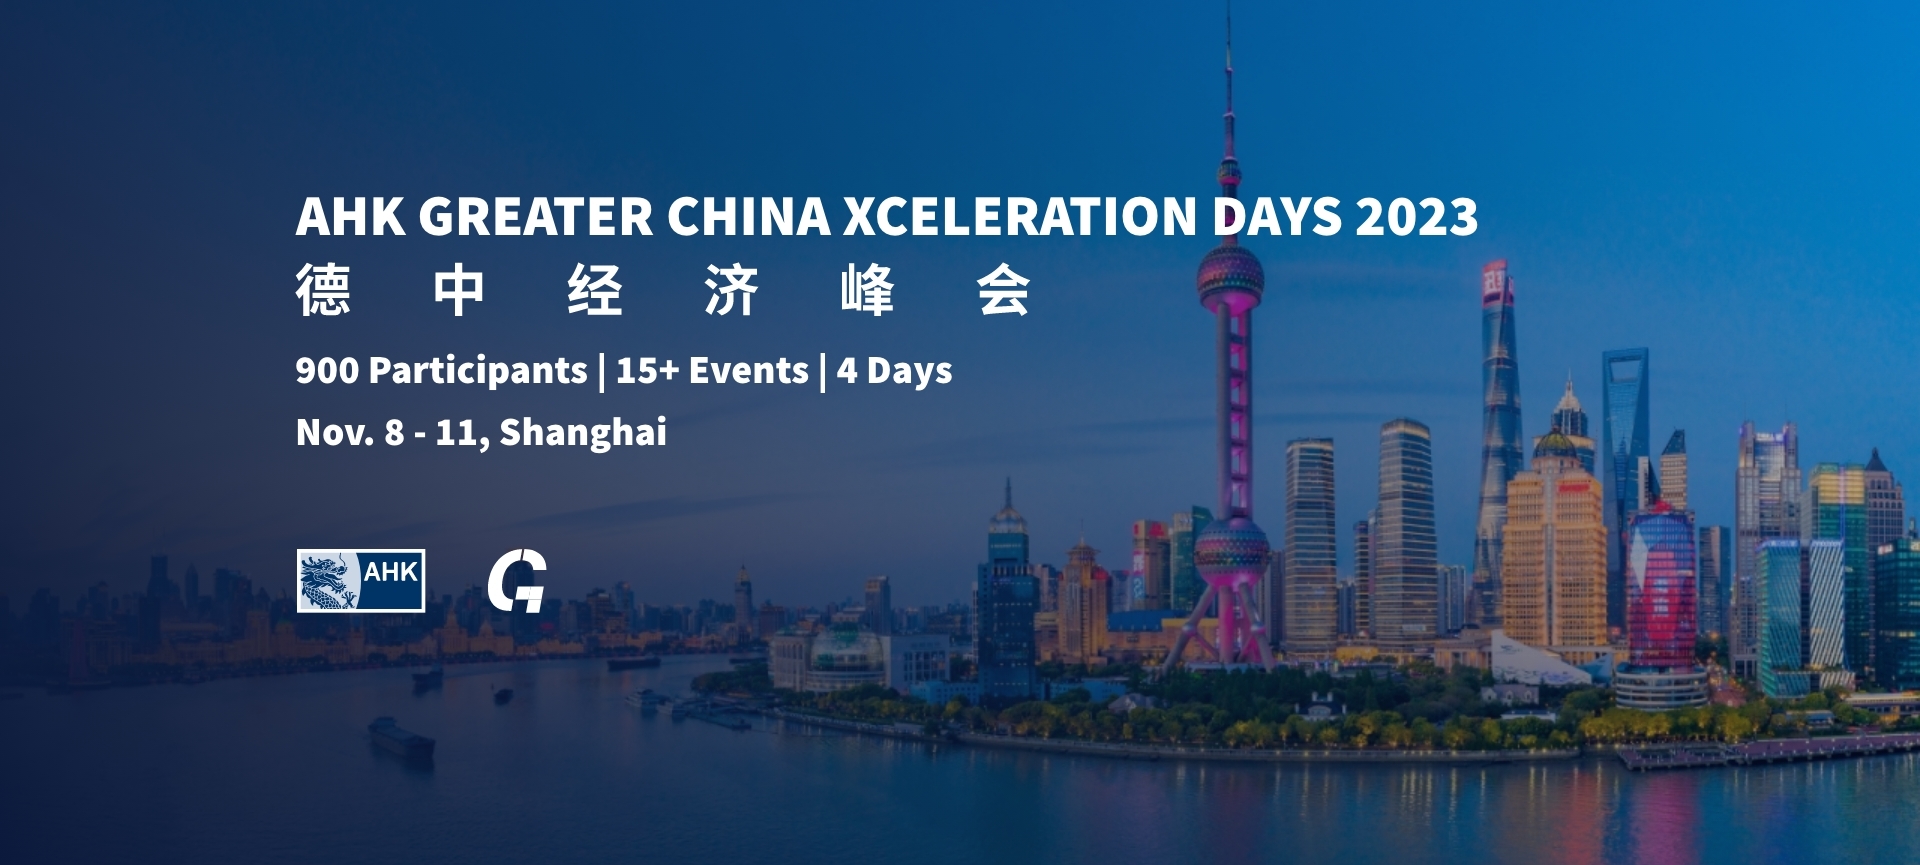 AHK Greater China Xceleration Days 2023